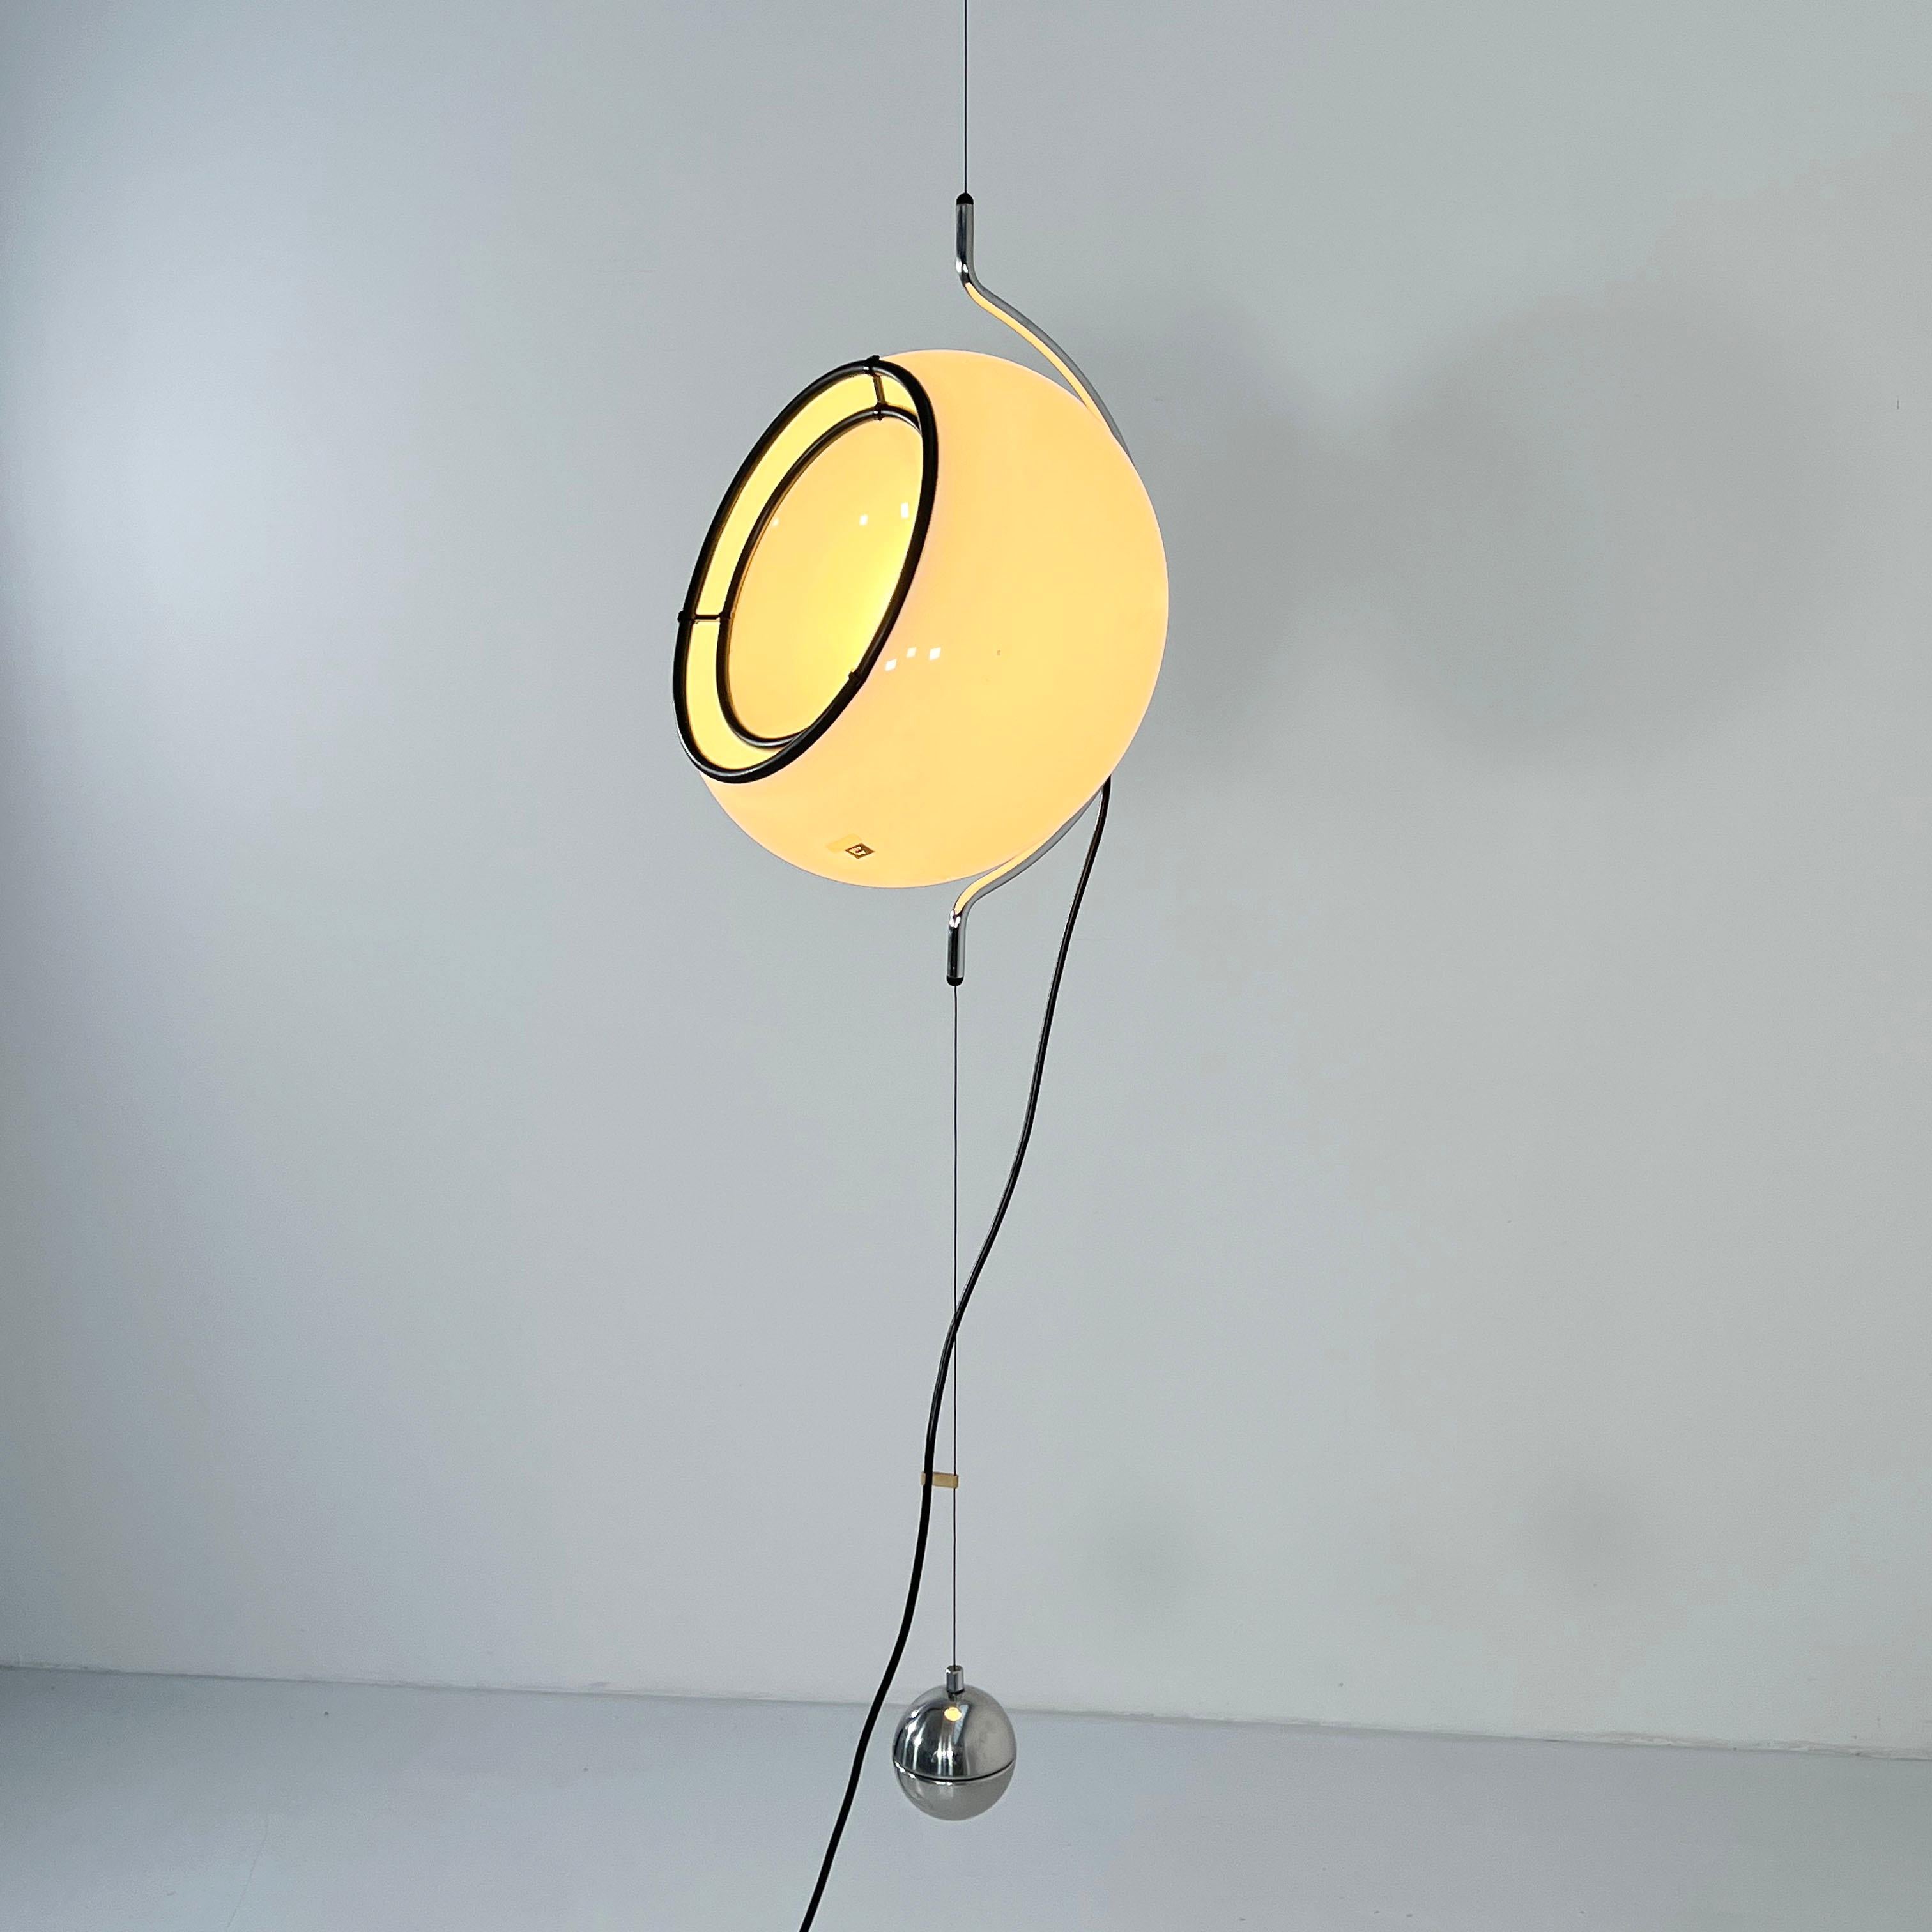 Designer - Studio 6G
Producer - Harvey Guzzini
Model - Incontro 4513 Hanging Lamp 
Design Period - Seventies
Measurements - Width 30 cm x Depth 30 cm x Height 50 cm (Wire / Hanging System - 170 cm) 
Materials - Plastic, Metal
Color - White,